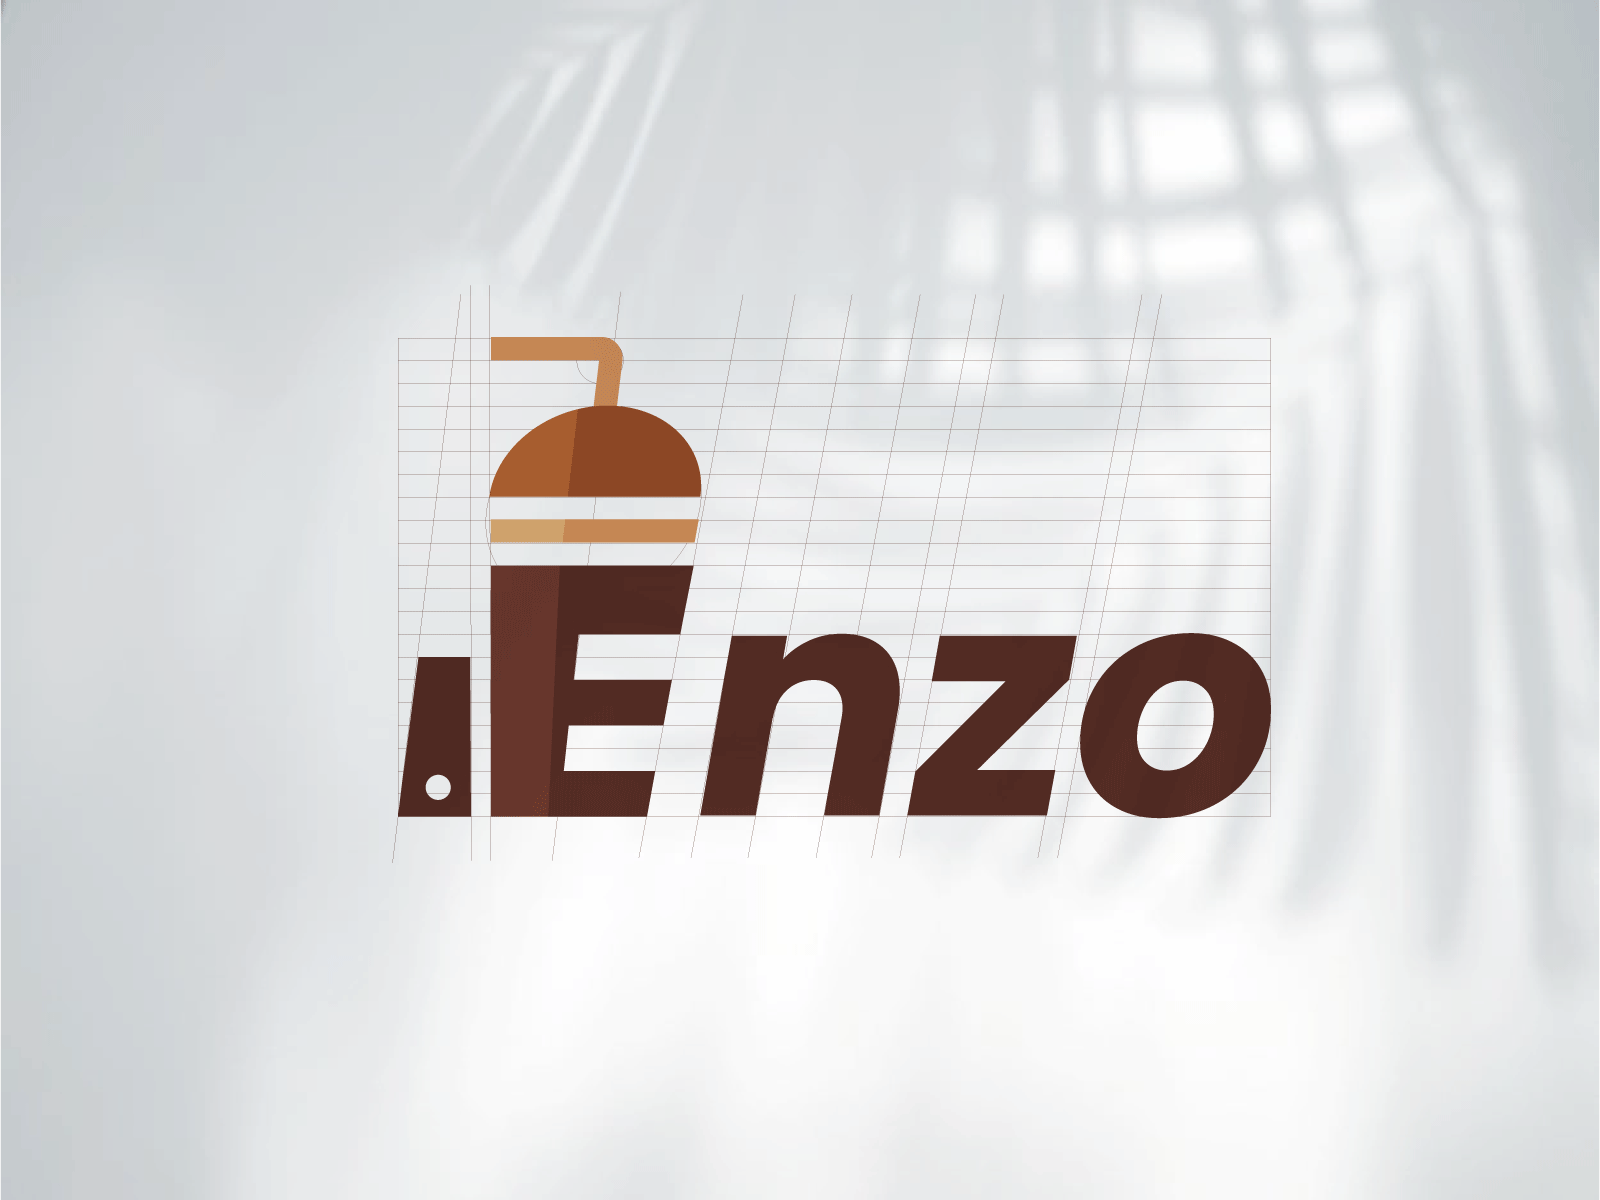 Enzo coffee brand identity branding business icon coffe shop coffee coffee logo design design art graphic design logo logo branding logo design logo mark logotype ui